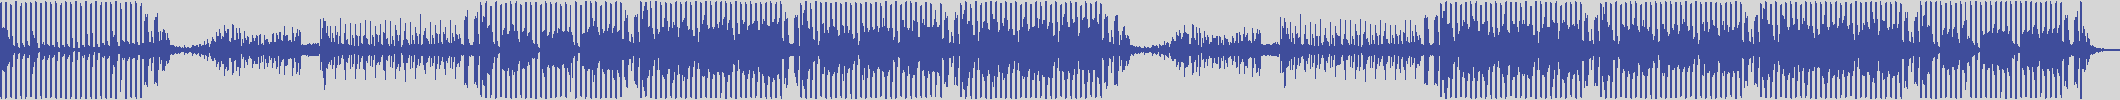 nf_boyz_records [NFY043] Life Tonic - Circumspection [Martin & Billie's Revolving Mix] audio wave form